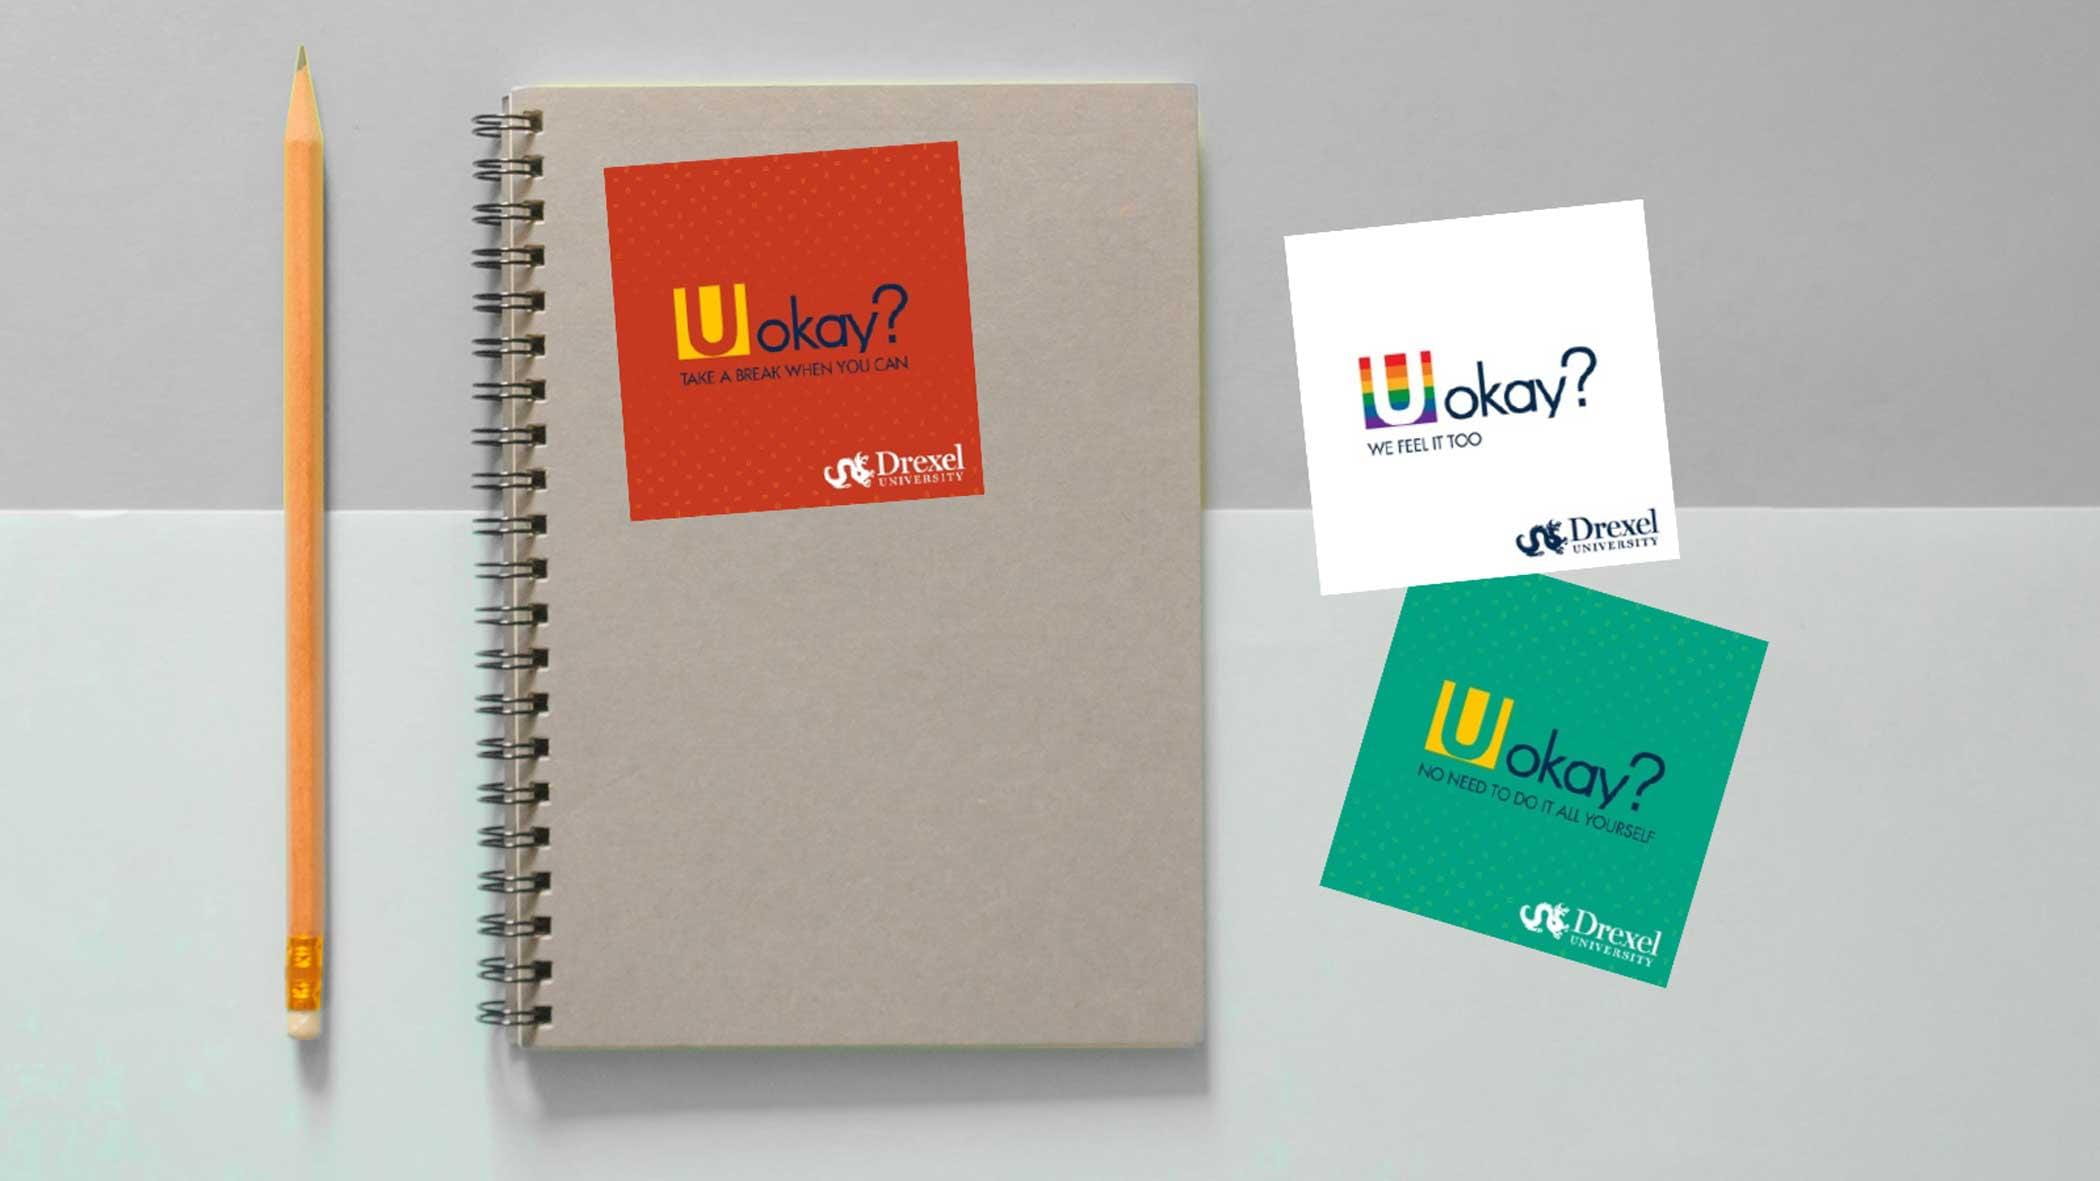 uOkay Campaign stickers